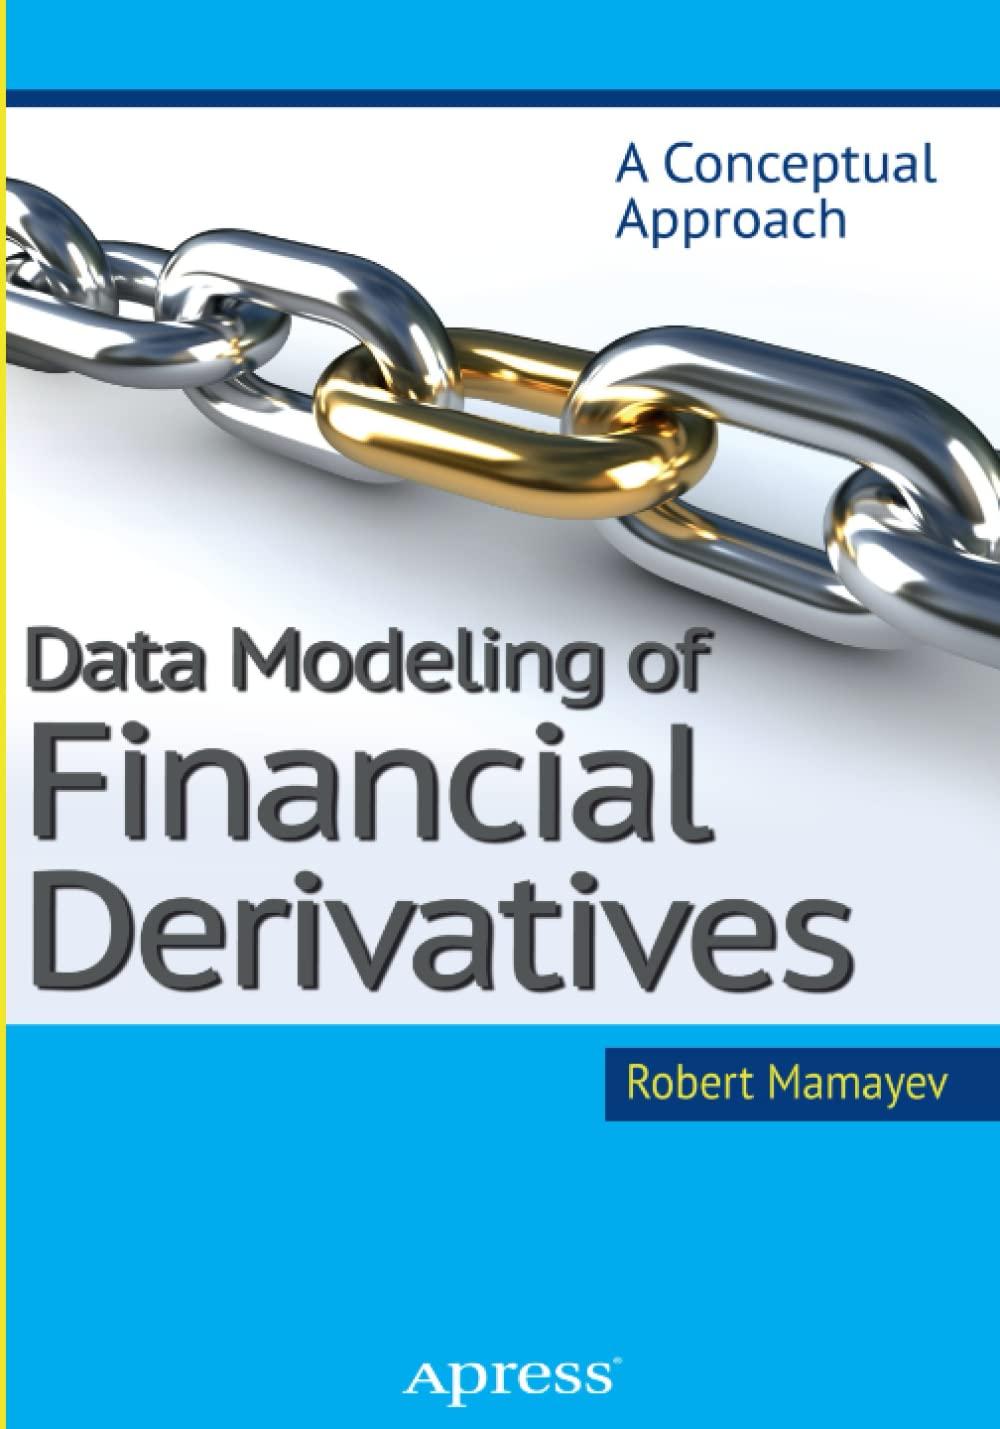 data modeling of financial derivatives a conceptual approach 1st edition robert mamayev 1430265892,